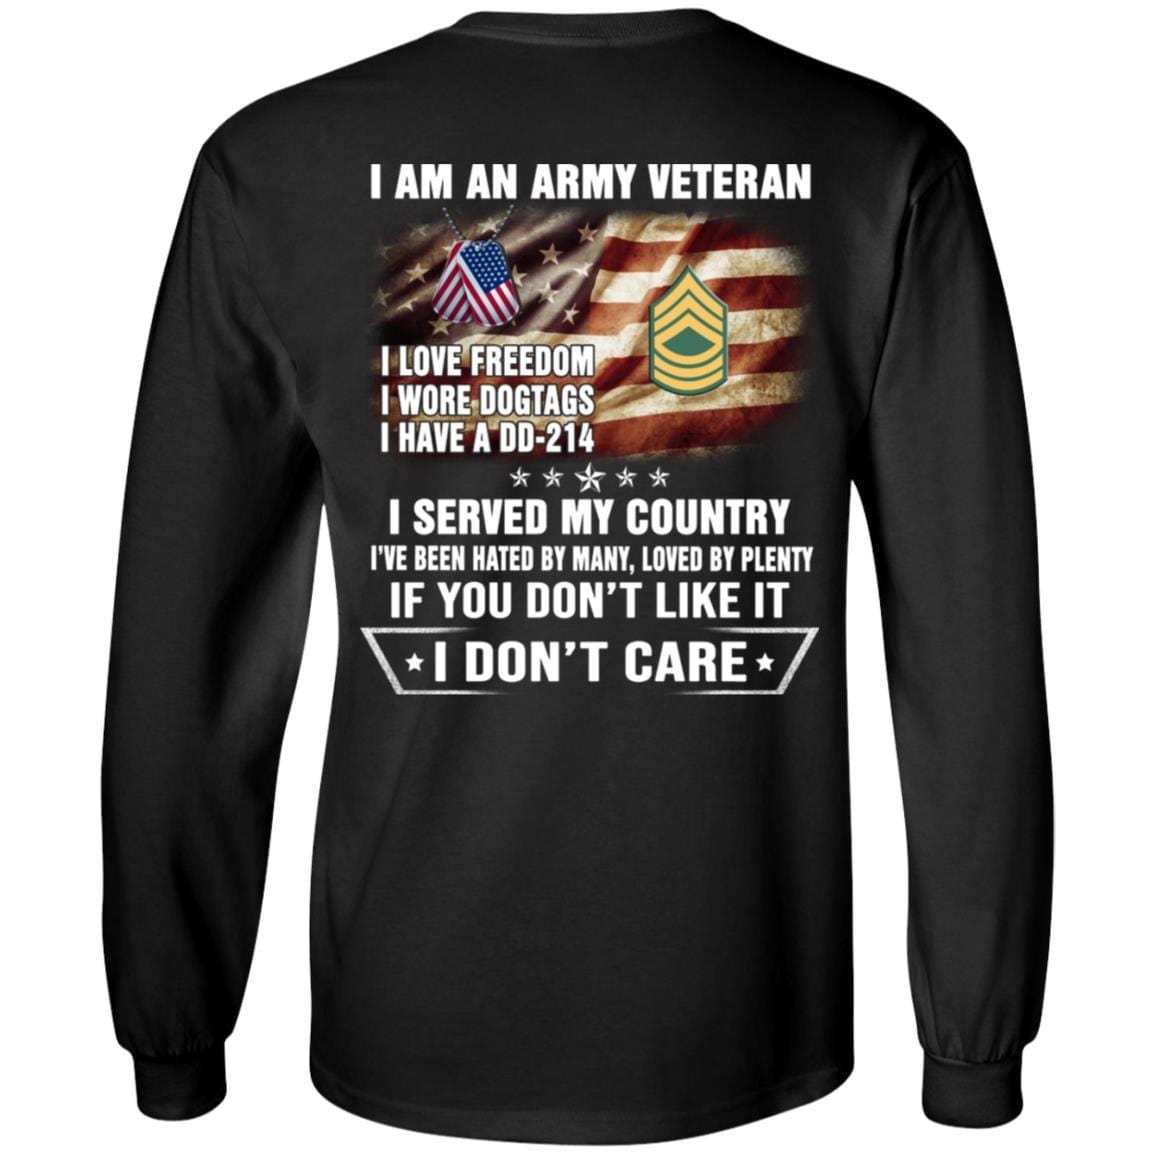 T-Shirt "I Am An Army Veteran" E-8 Master Sergeant(MSG)Rank On Back-TShirt-Army-Veterans Nation